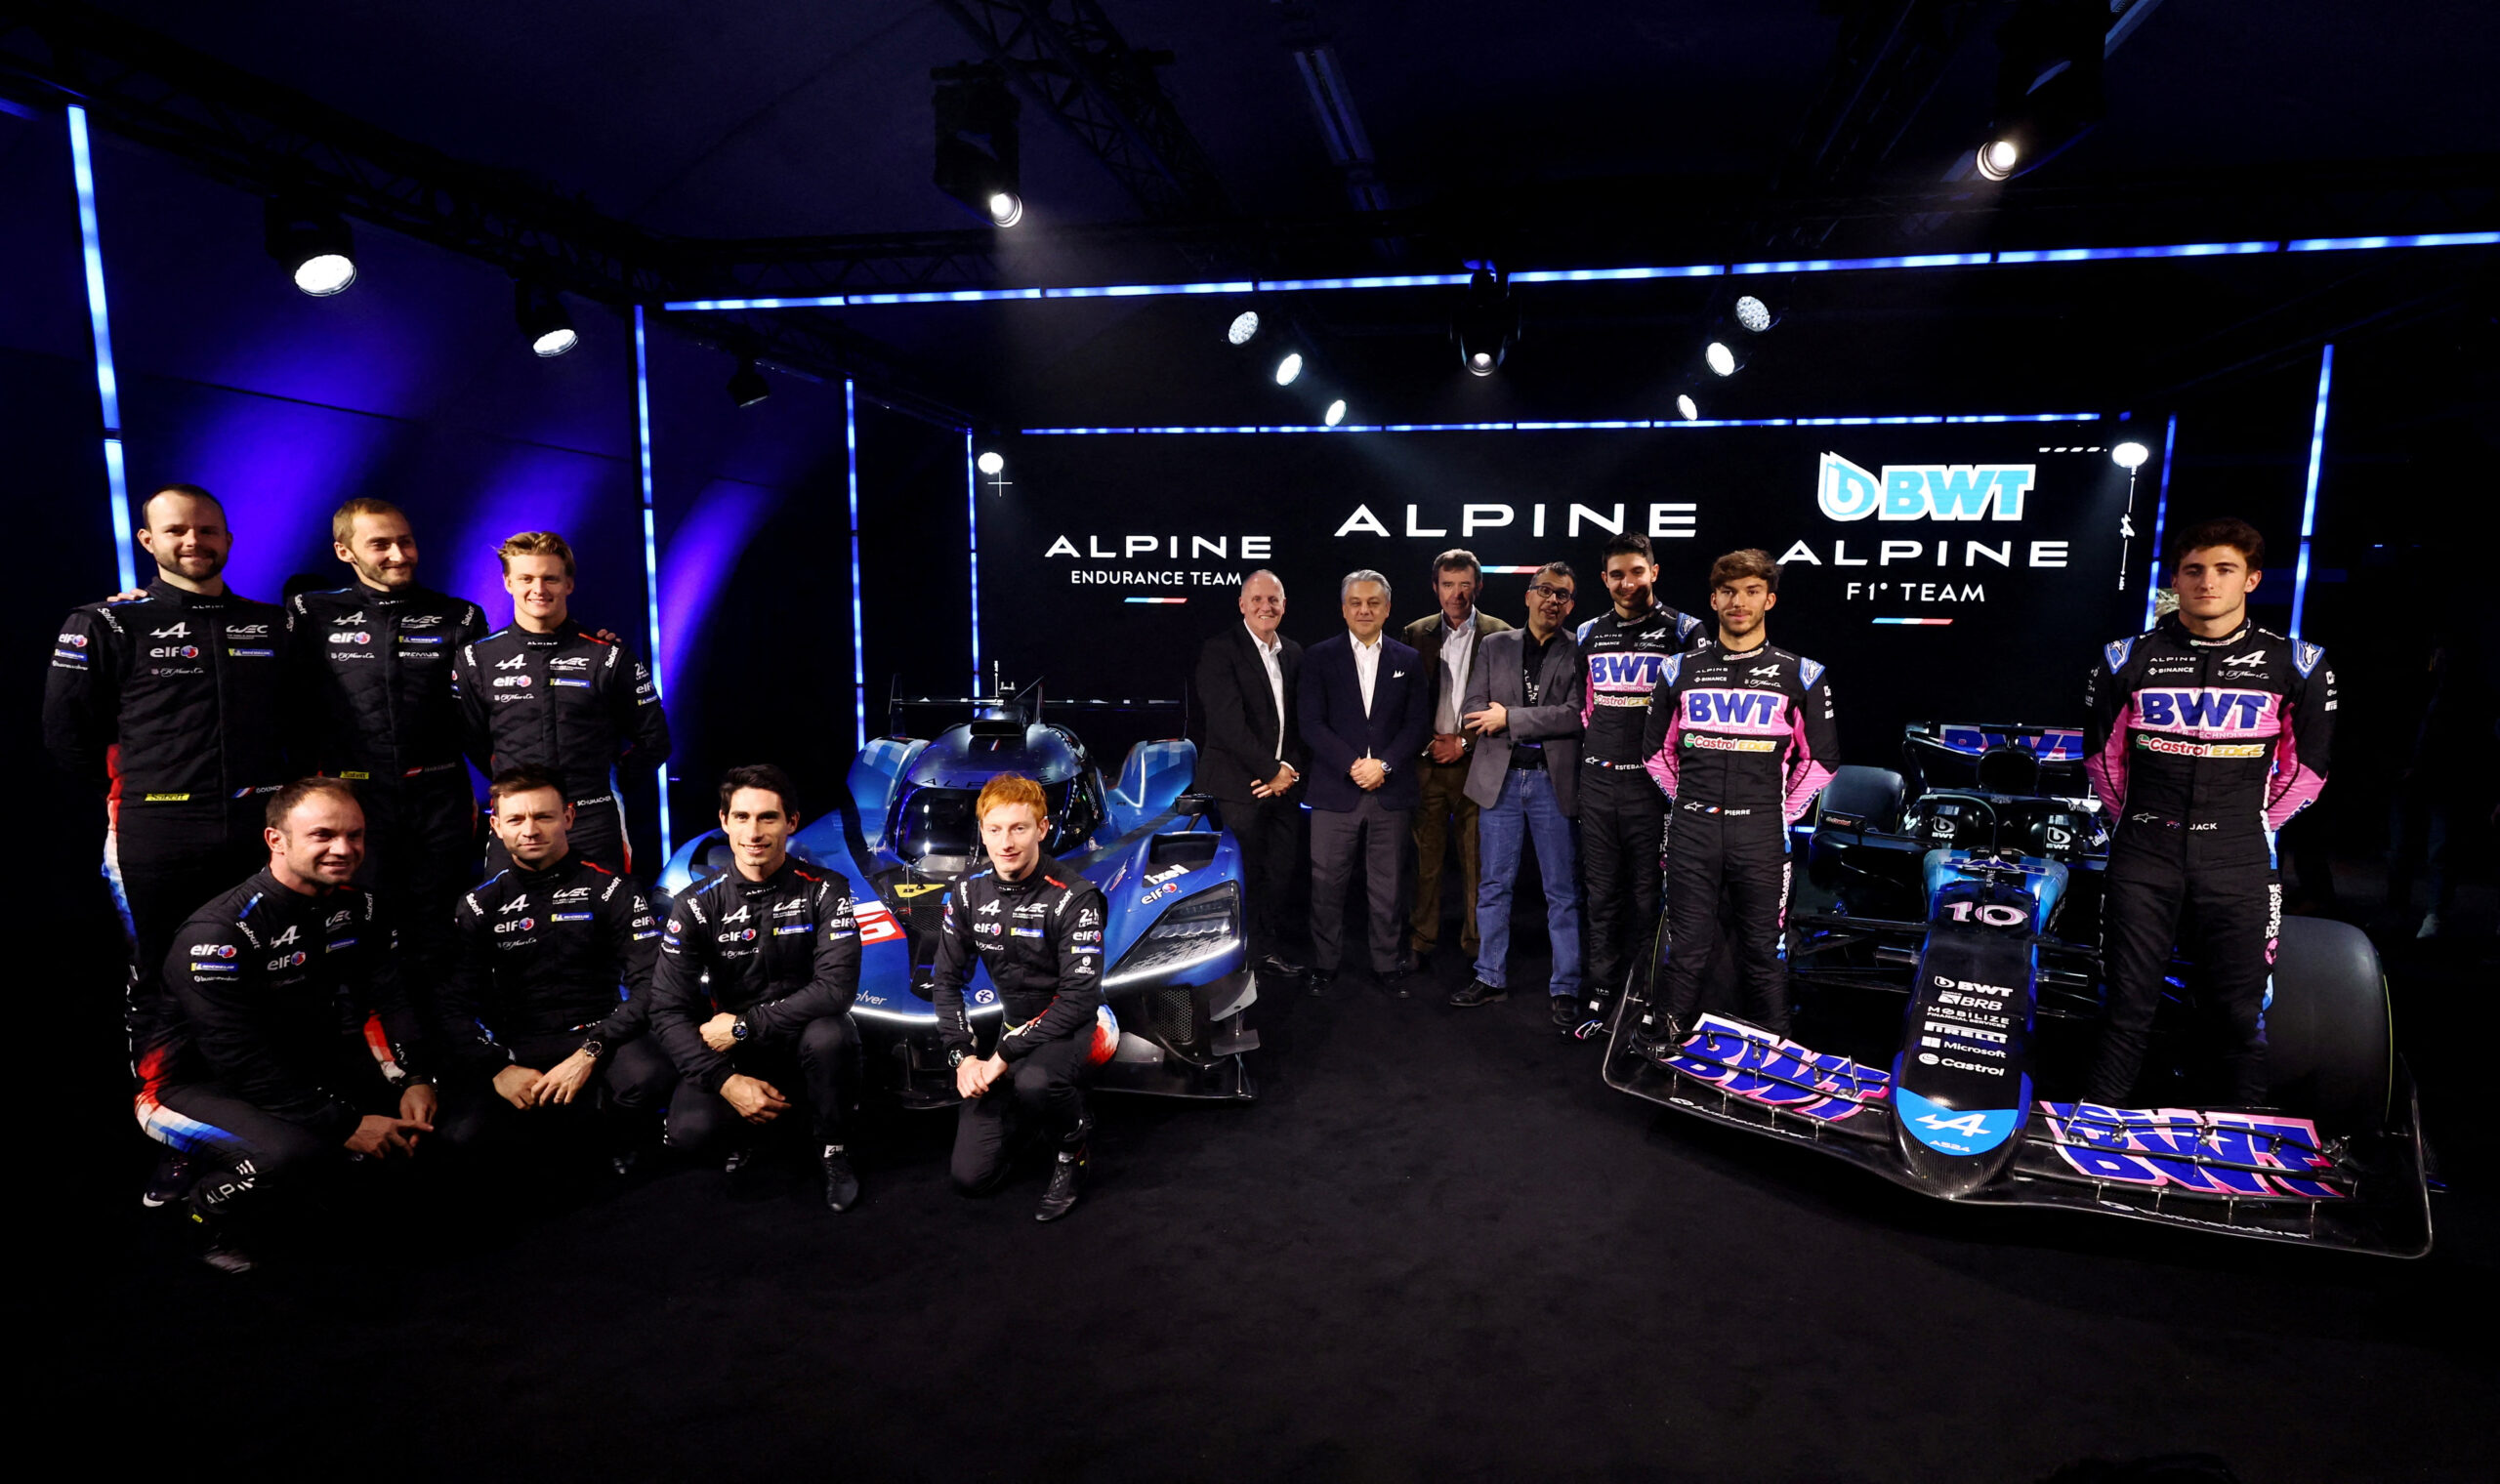 Alpine team F1 